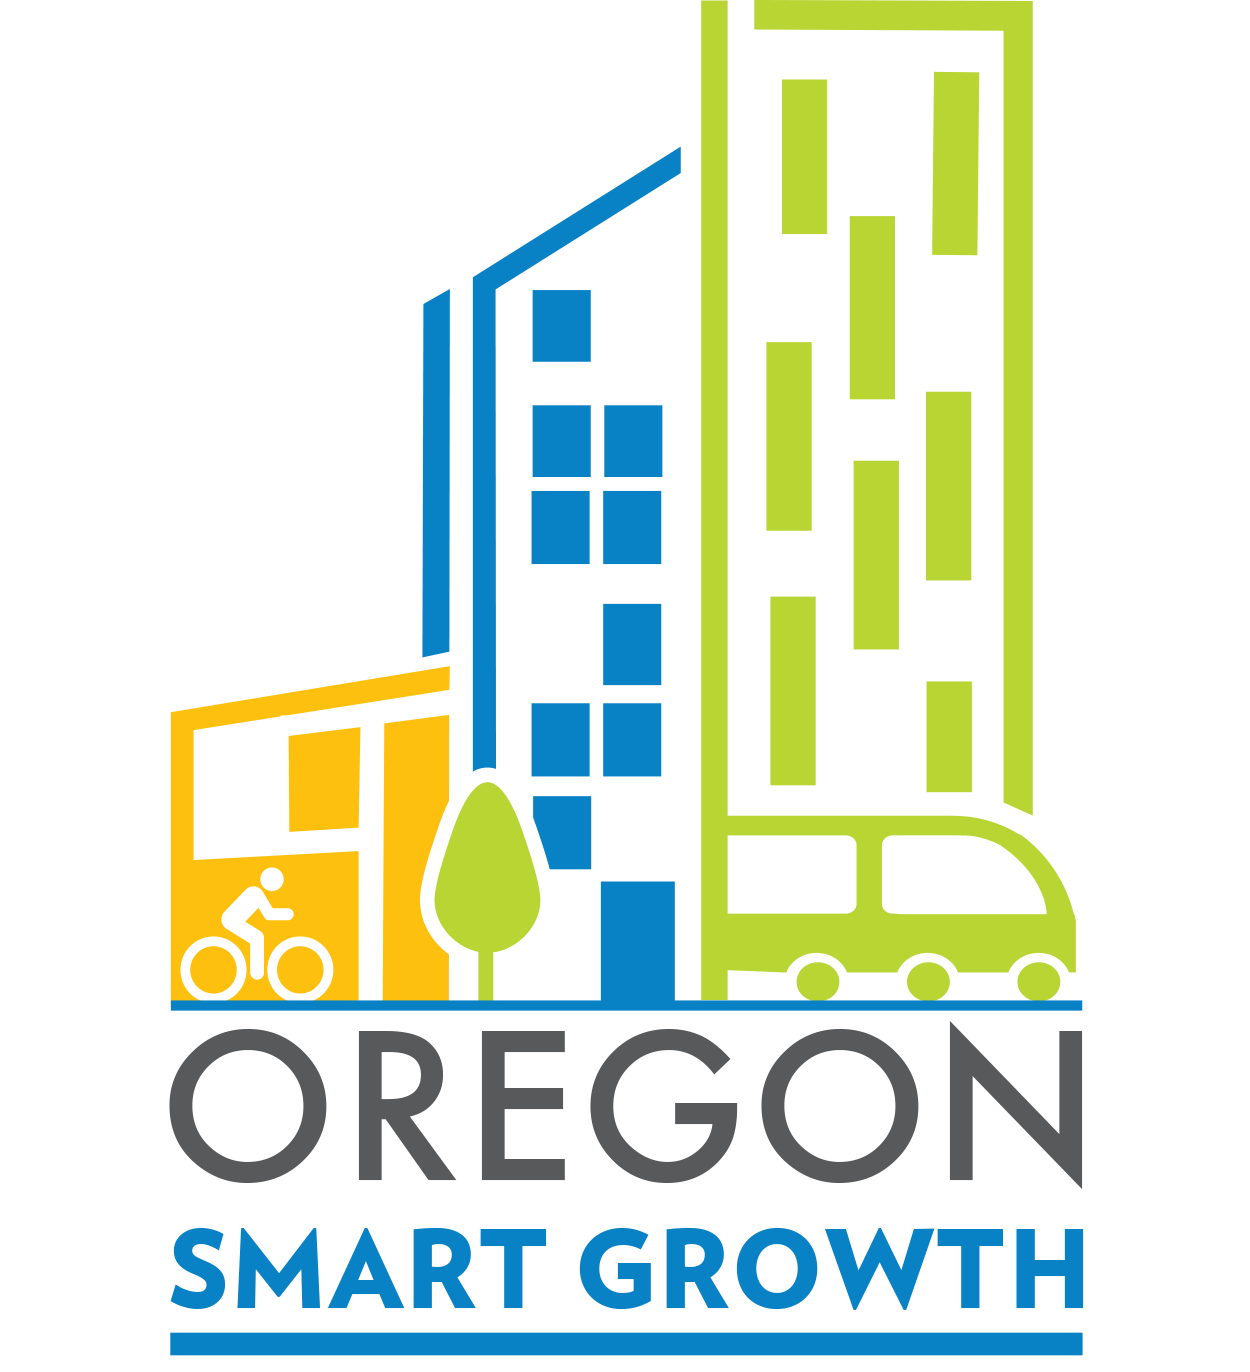 Oregon Smart Growth logo.